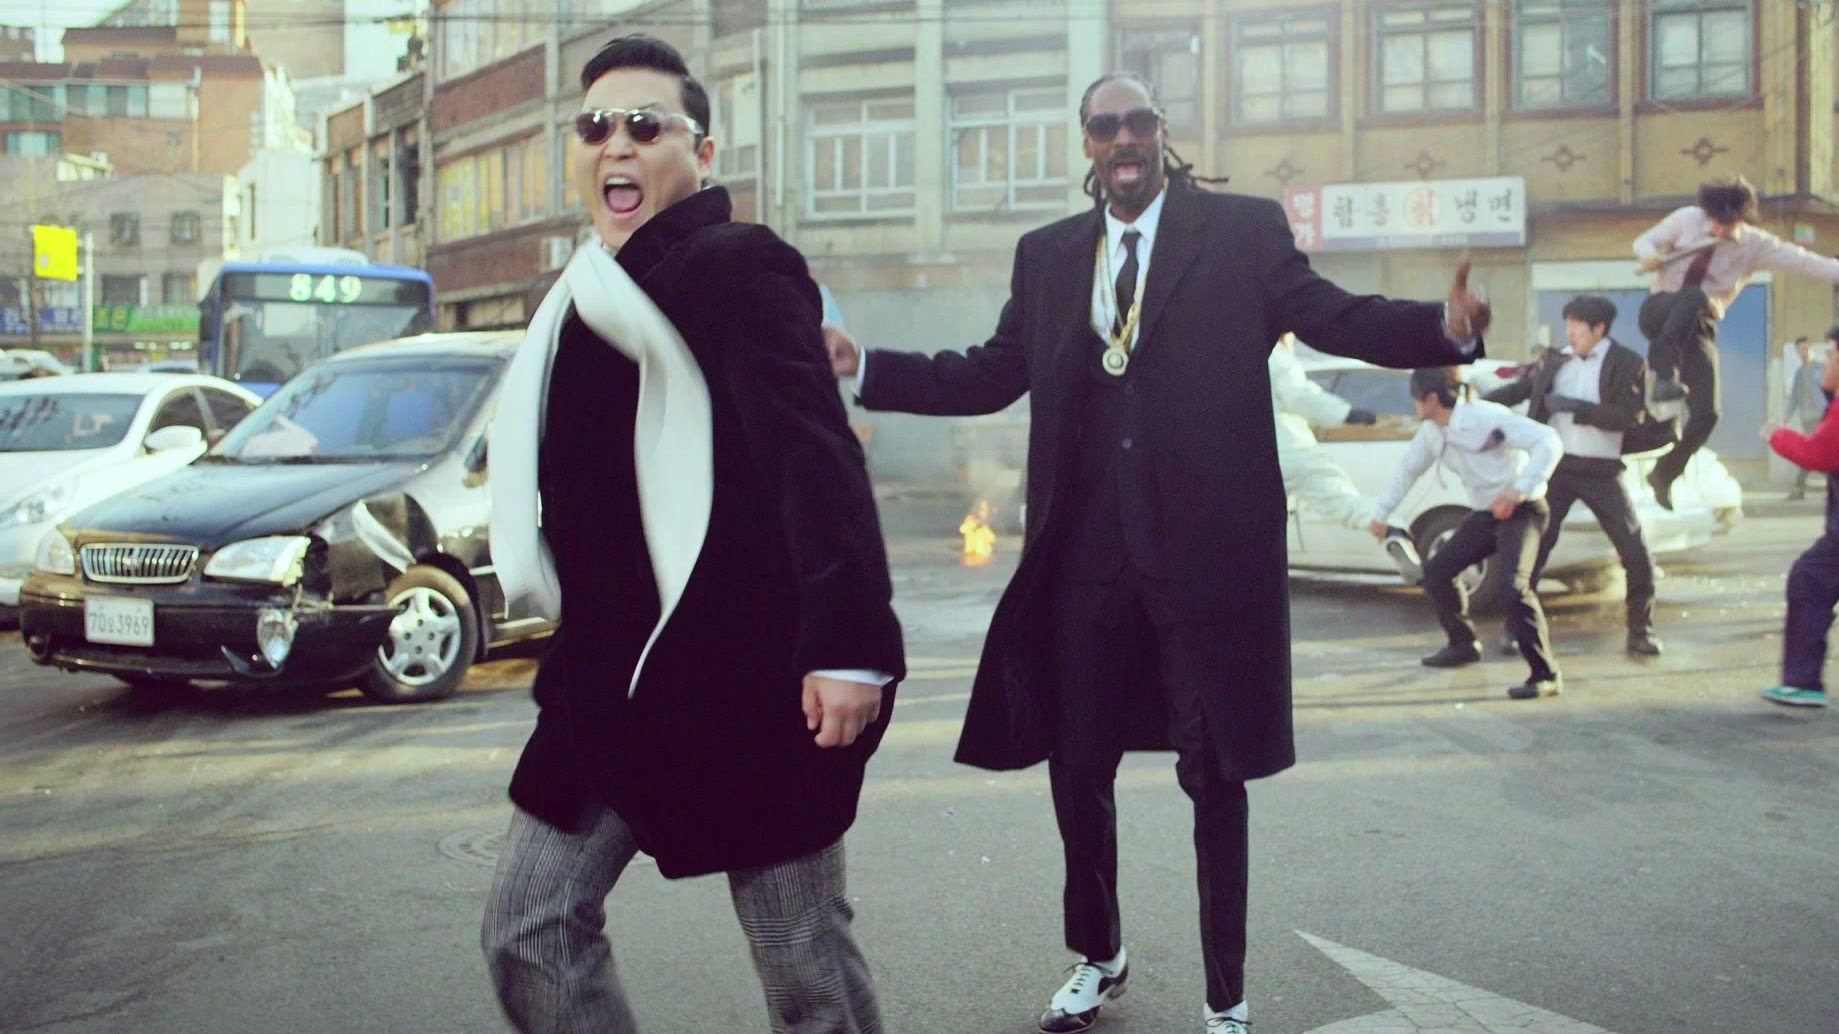 PSY + Snoop Dogg = “Hangover” (video)